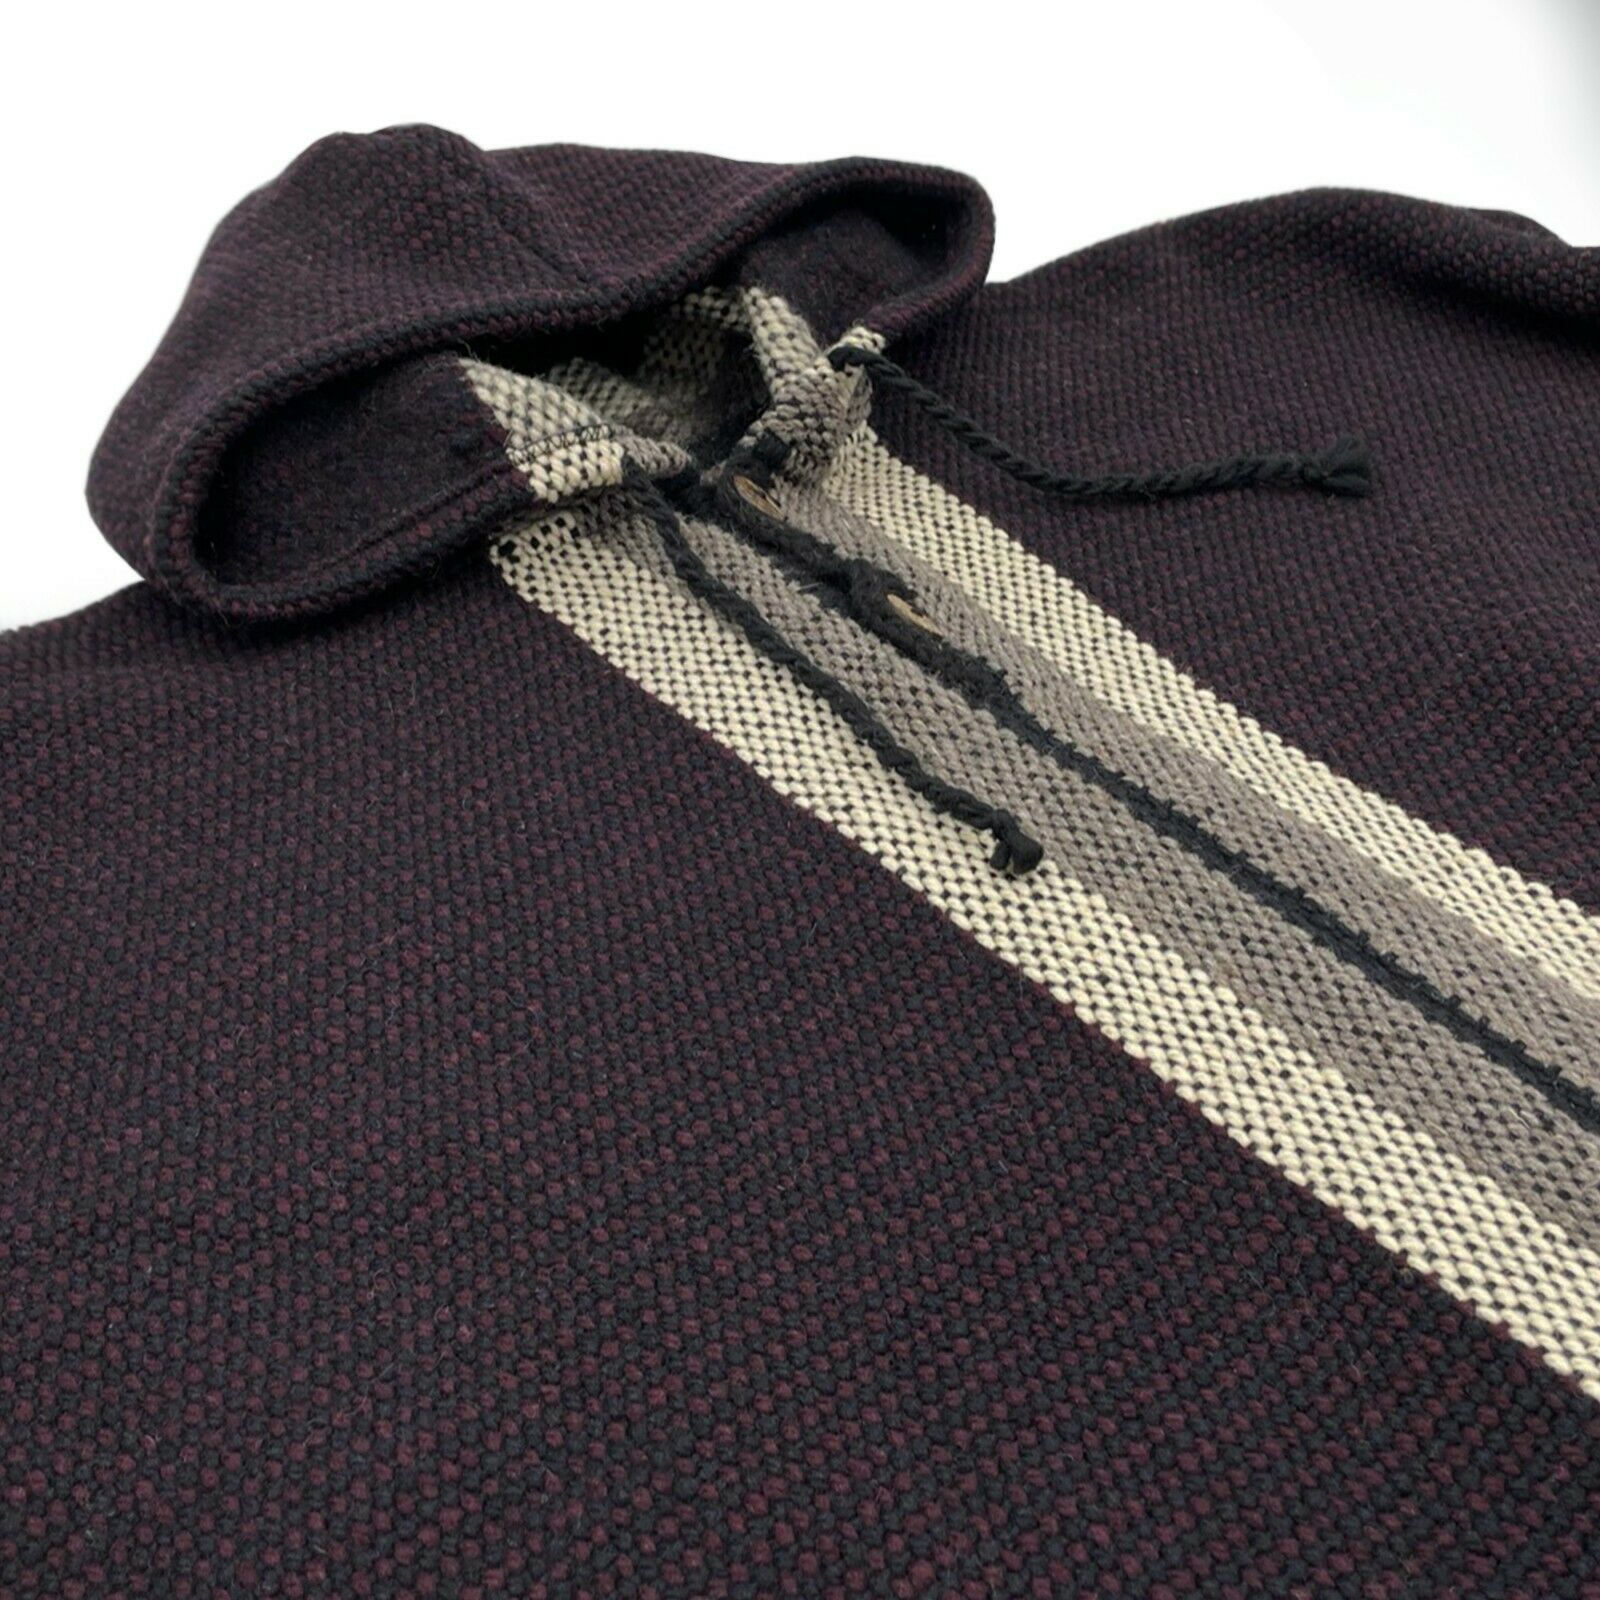 Nanguipa - Llama Wool Unisex South American Handwoven Wide Thick Poncho - striped pattern